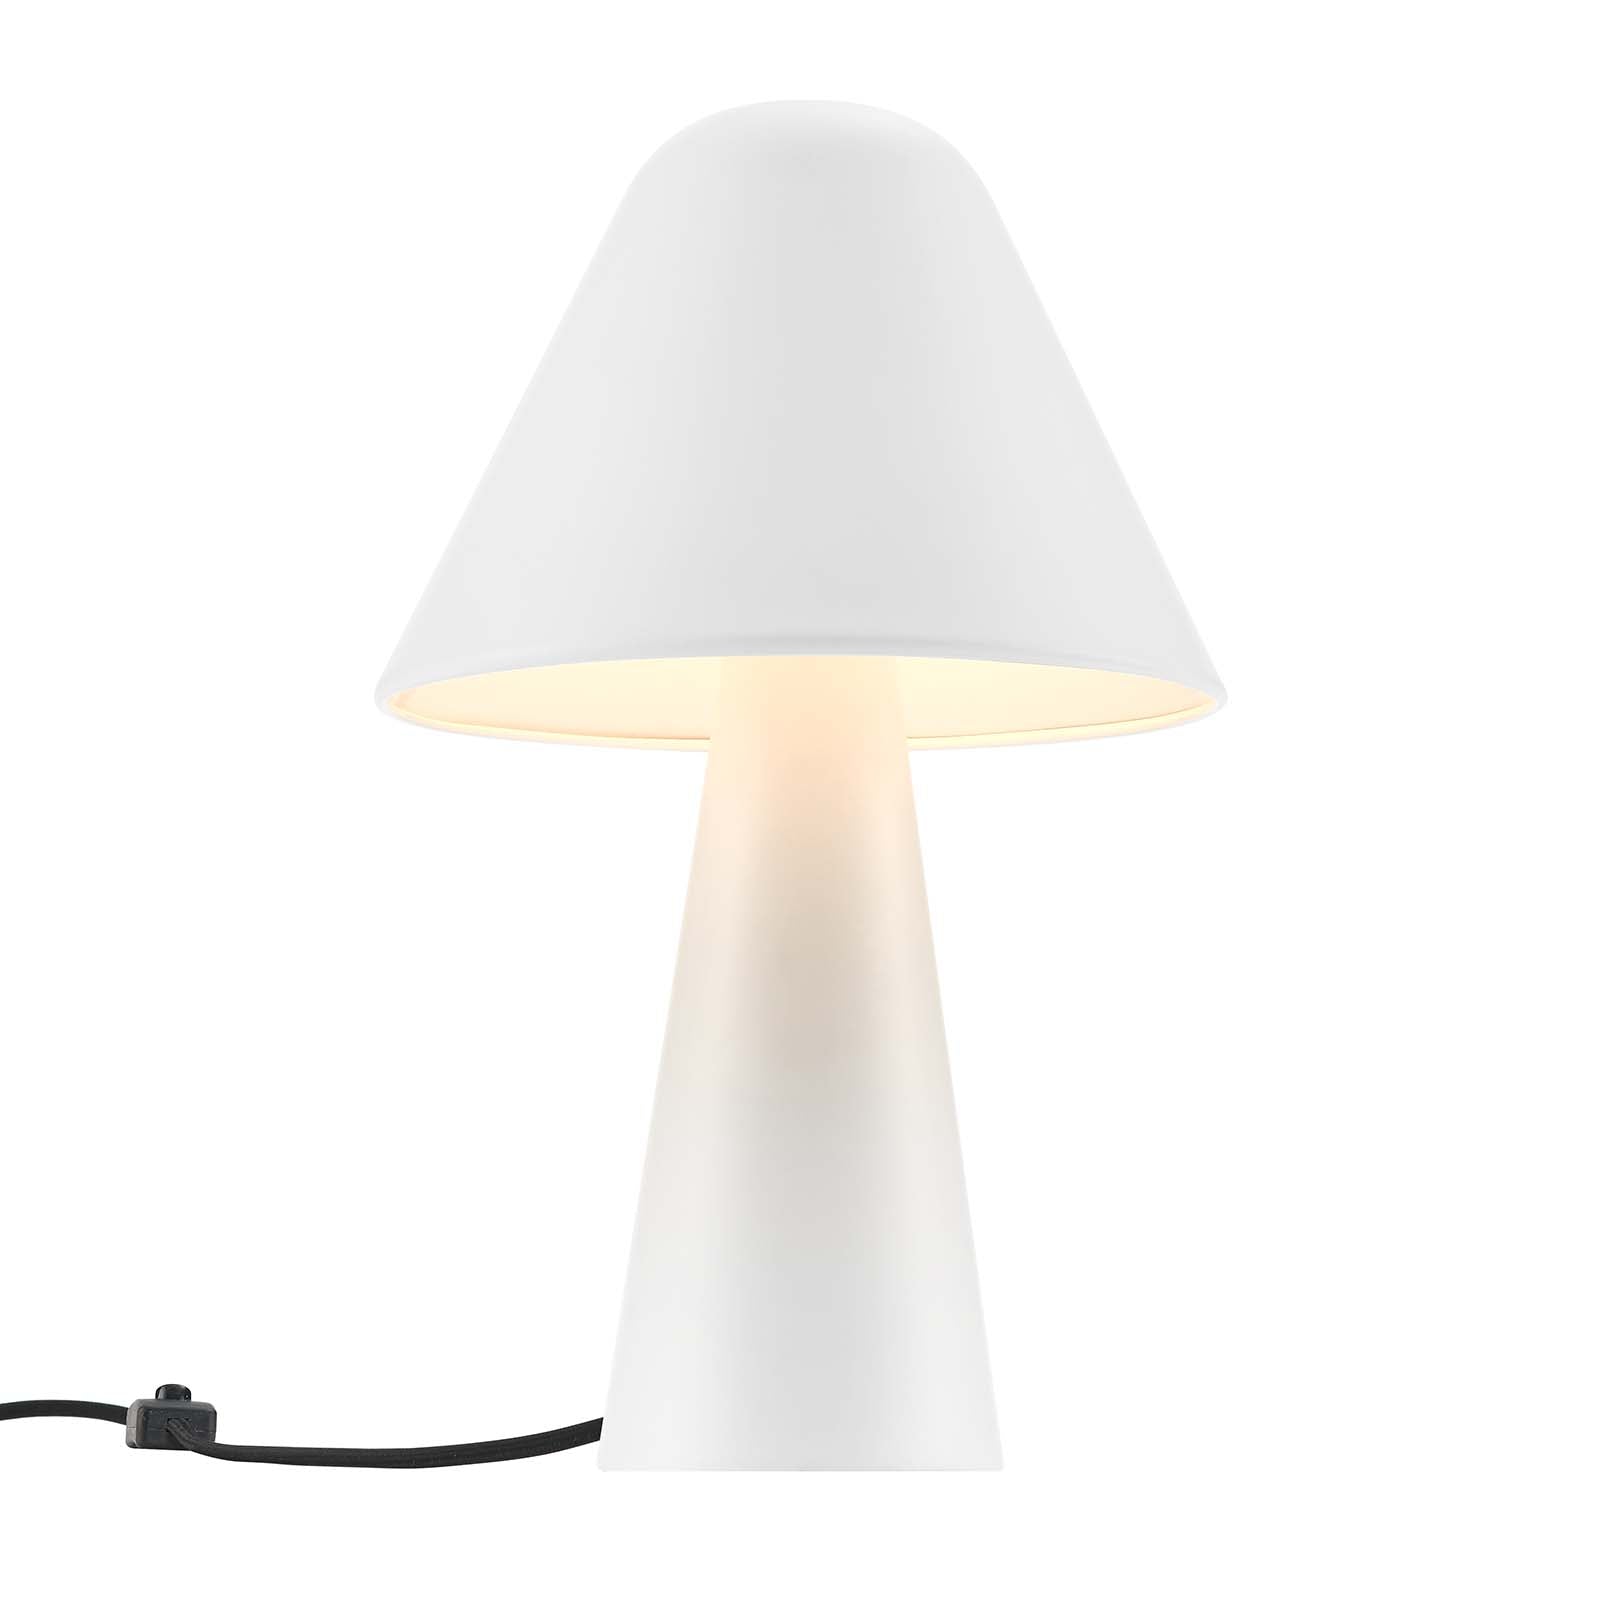 Jovial Metal Mushroom Table Lamp - East Shore Modern Home Furnishings